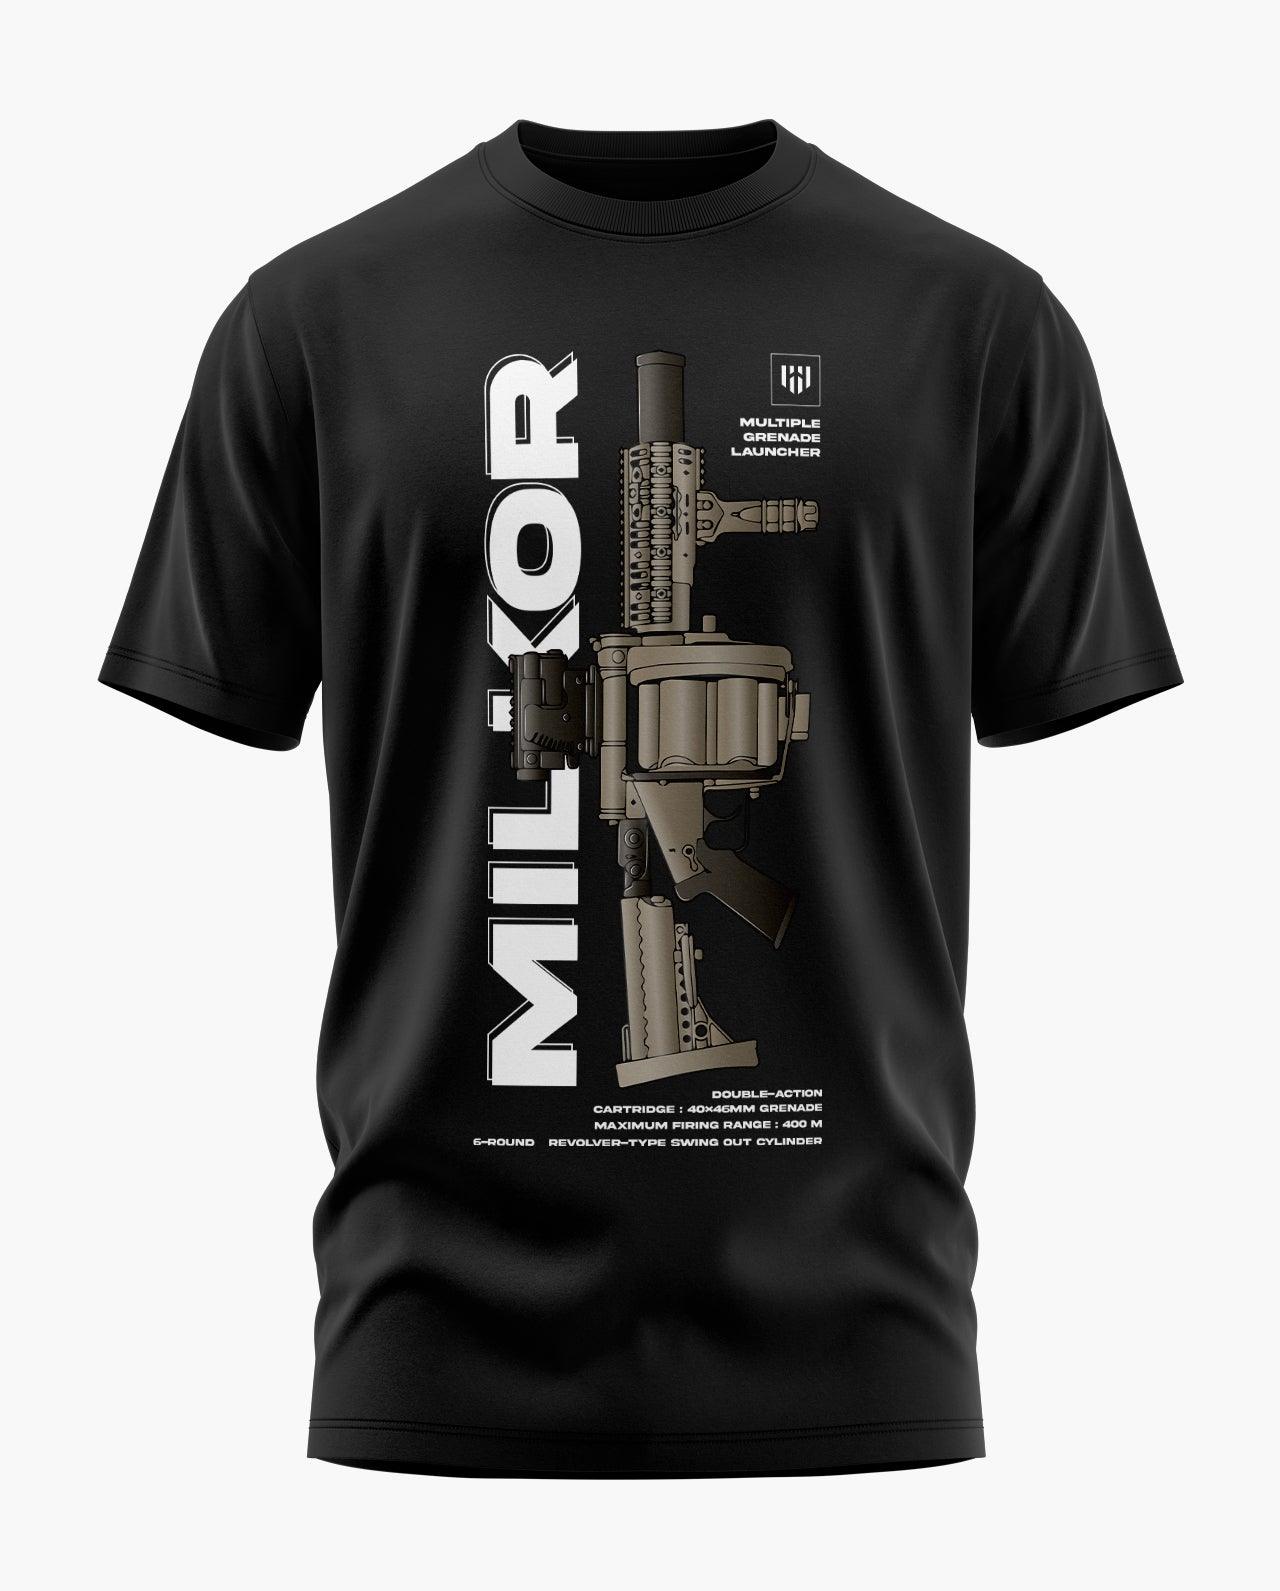 Grenade Launcher T-Shirt - Aero Armour